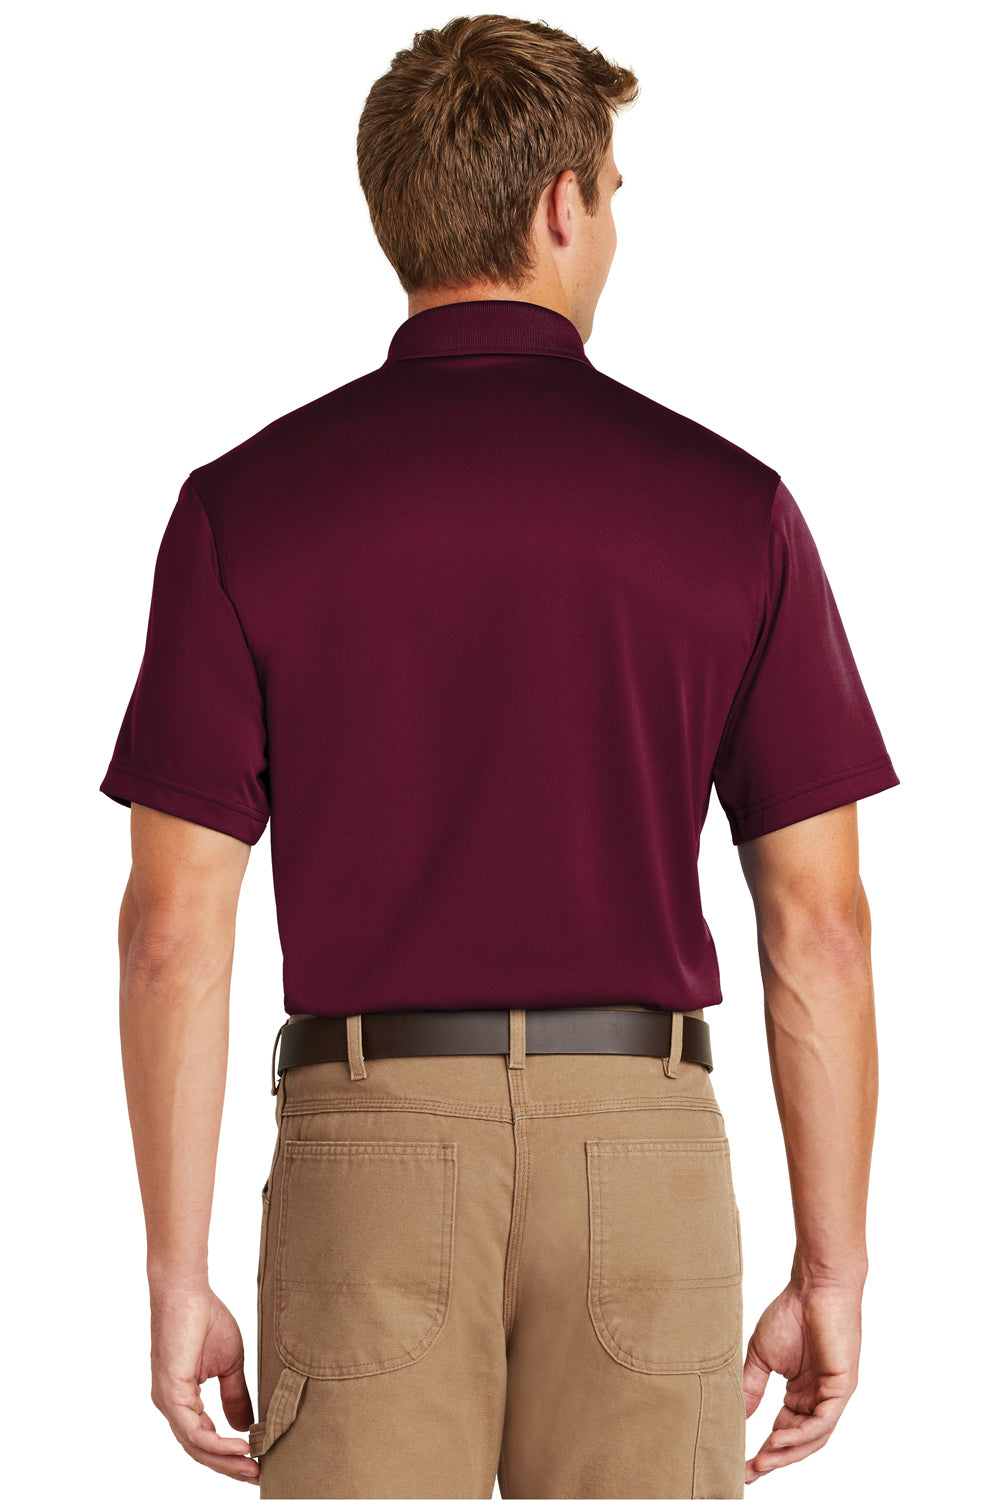 CornerStone CS412 Mens Select Moisture Wicking Short Sleeve Polo Shirt Maroon Back